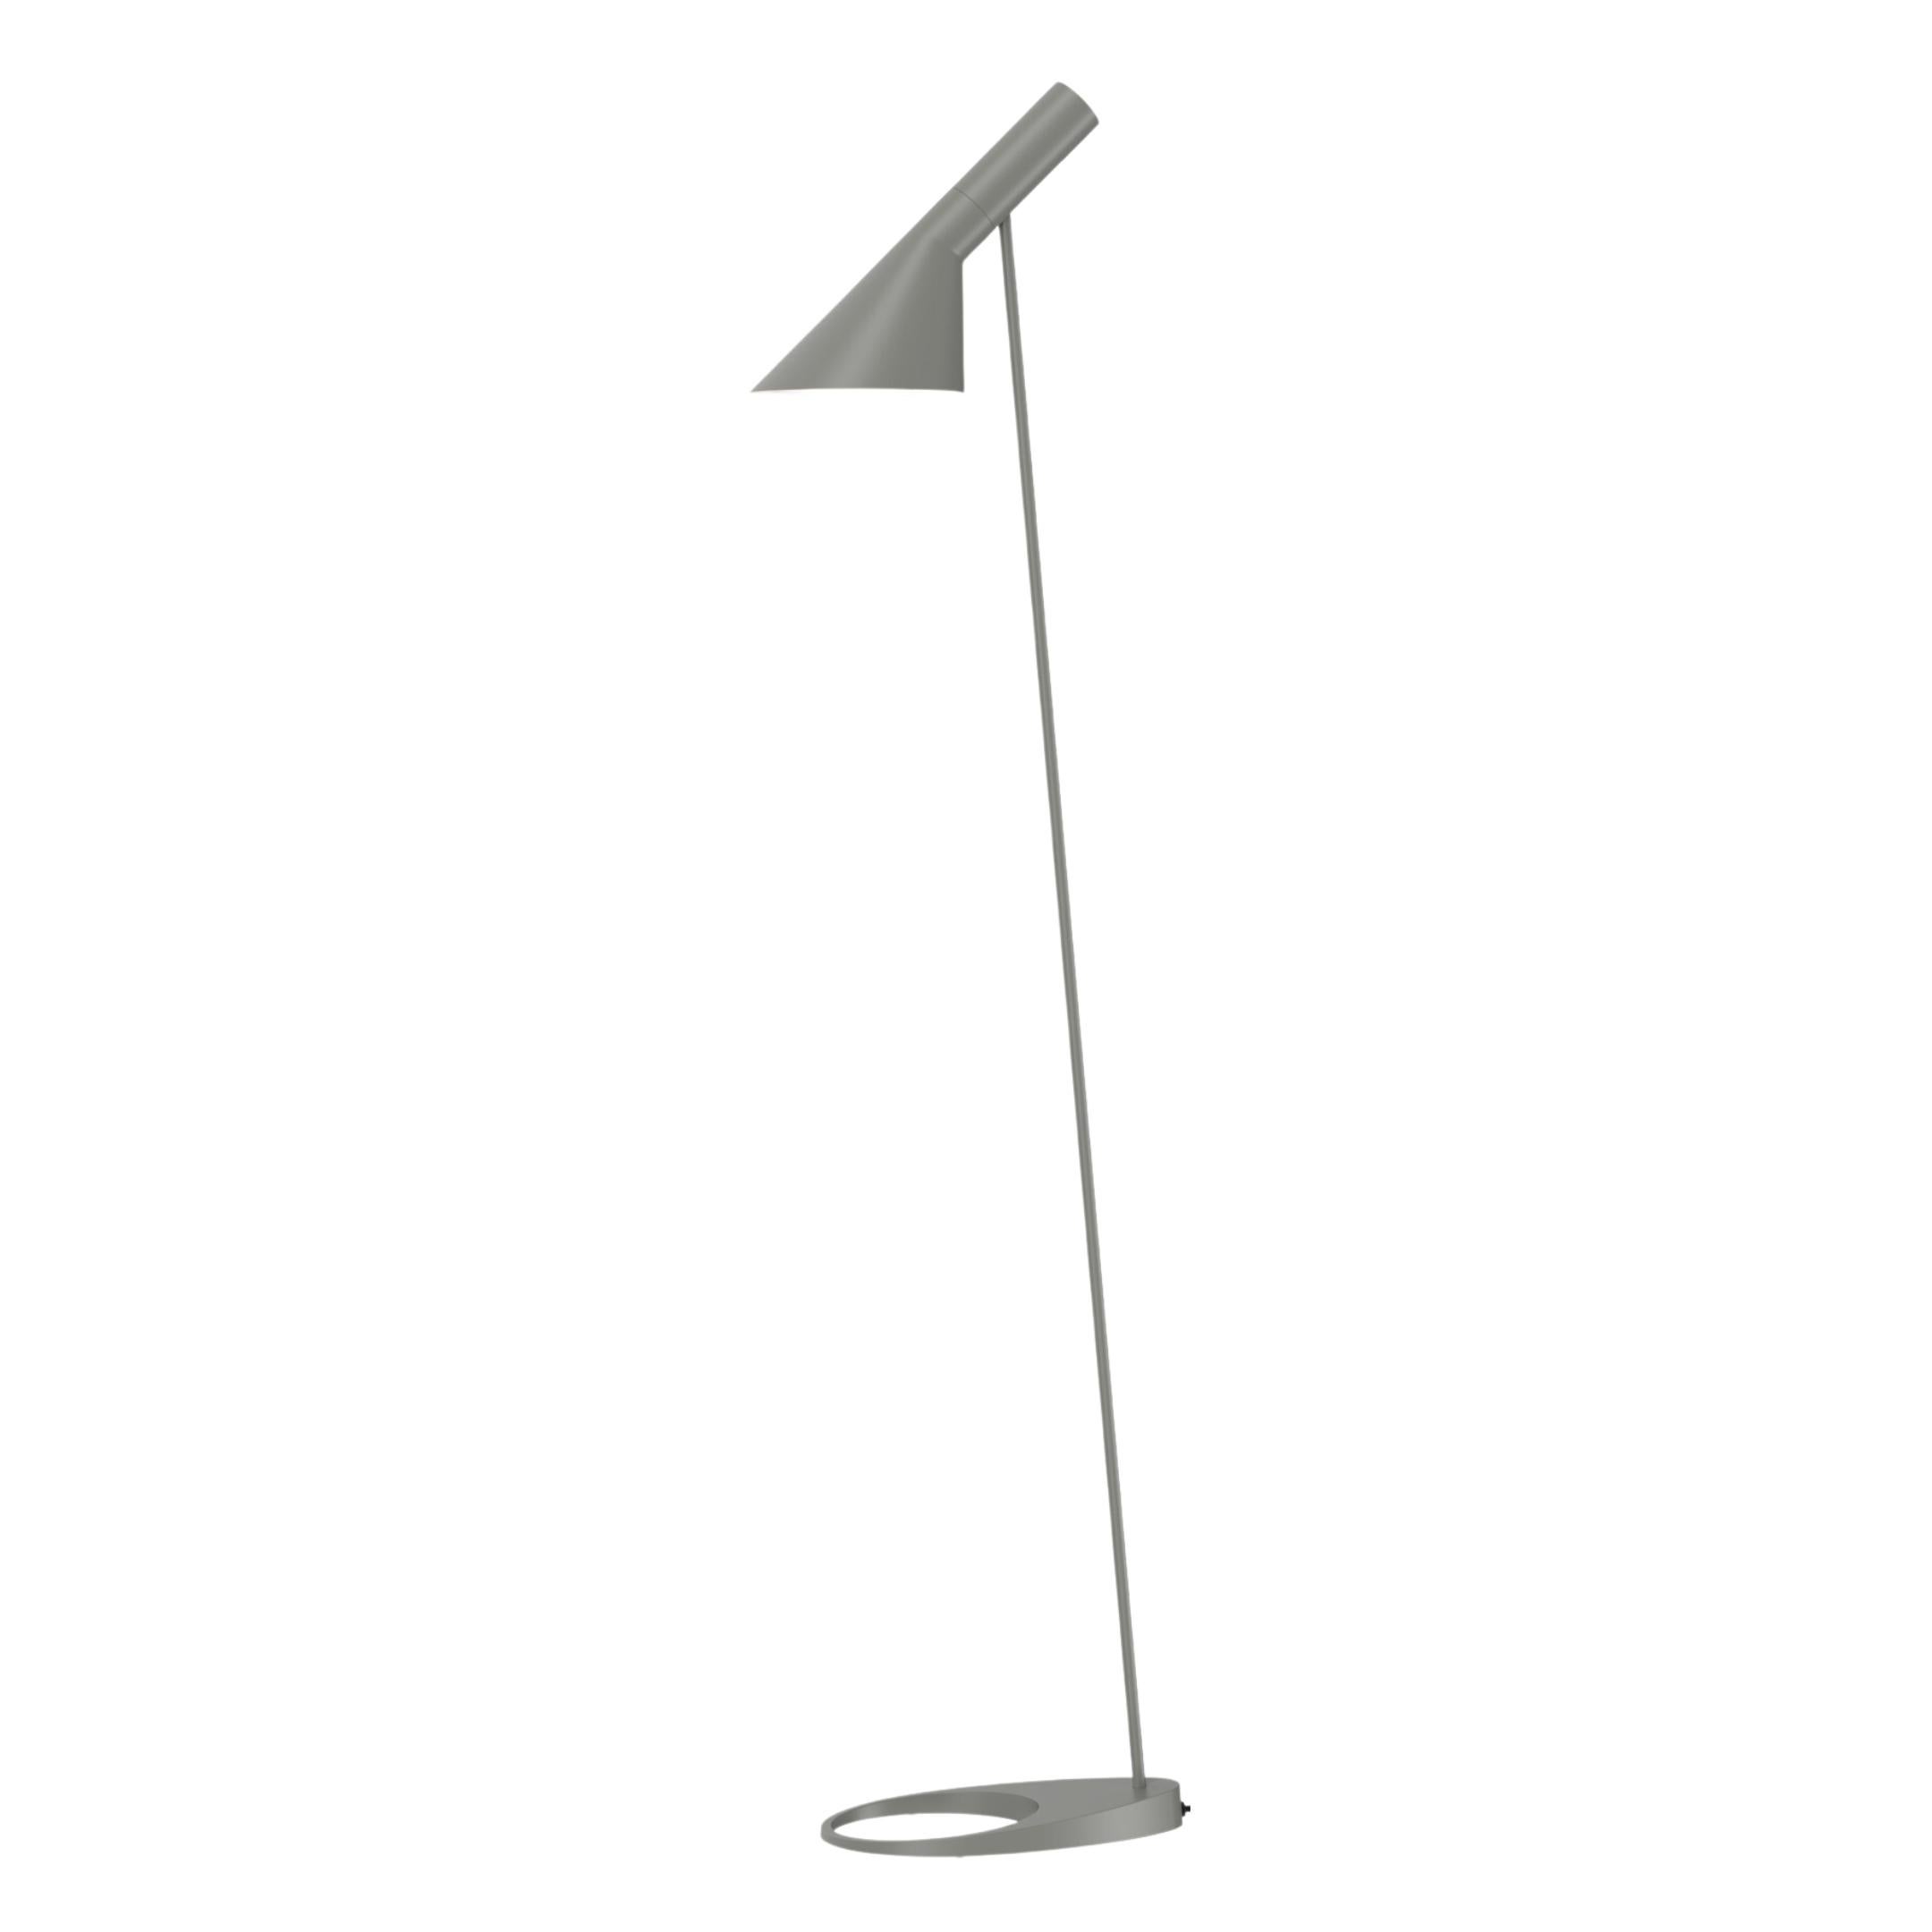 Arne Jacobsen AJ Floor Lamp in Electric Orange for Louis Poulsen For Sale 5